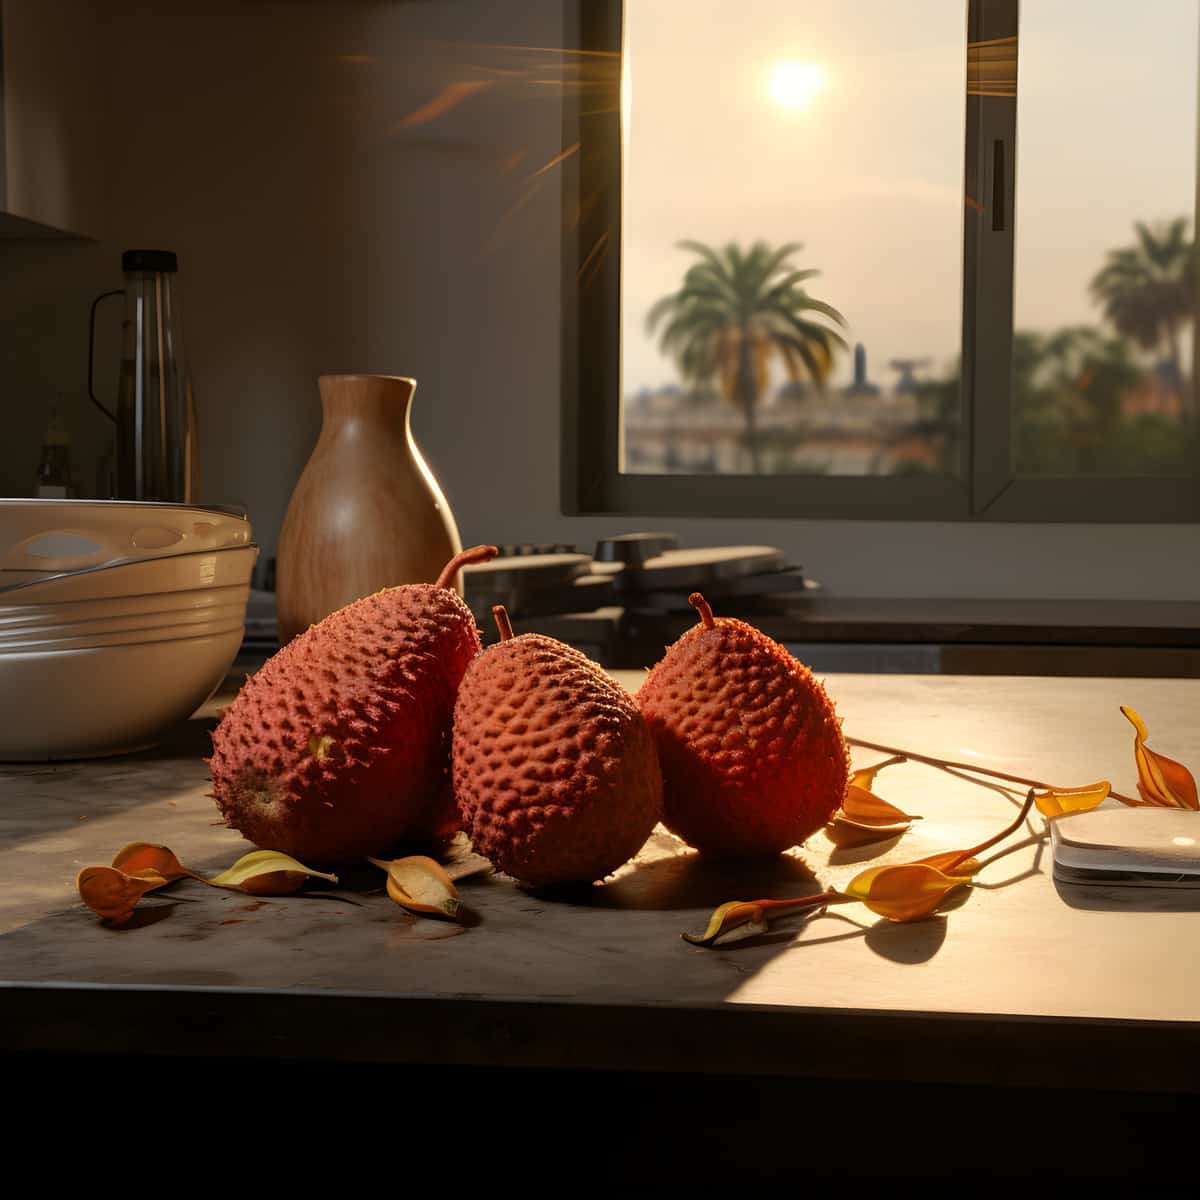 Dugdug Fruit on a kitchen counter